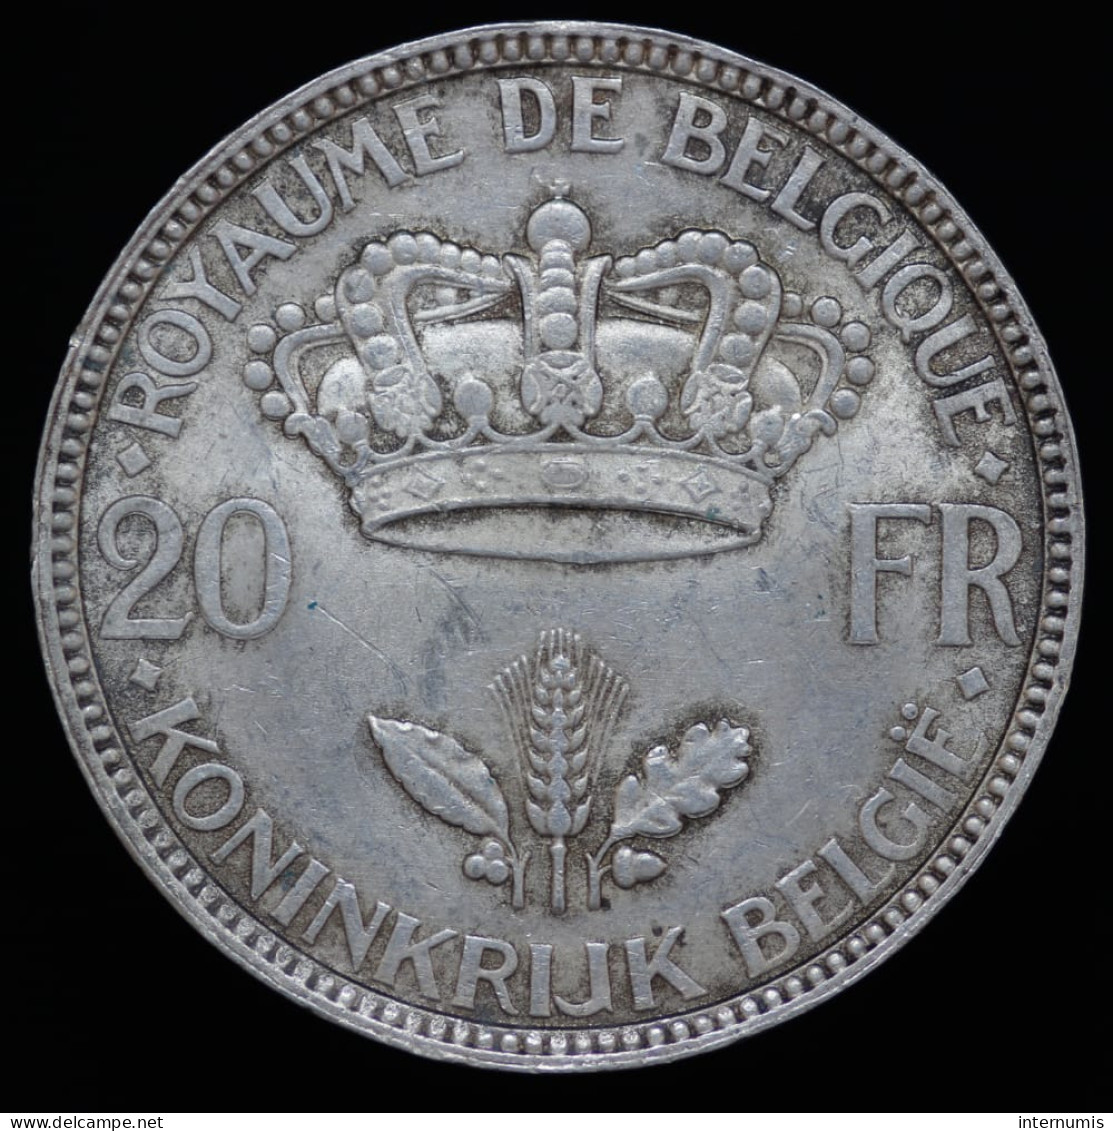 Belgique / Belgium, Léopold III, 20 Francs, 1935, Argent (Silver), SPL (UNC), KM#105 - 20 Francs